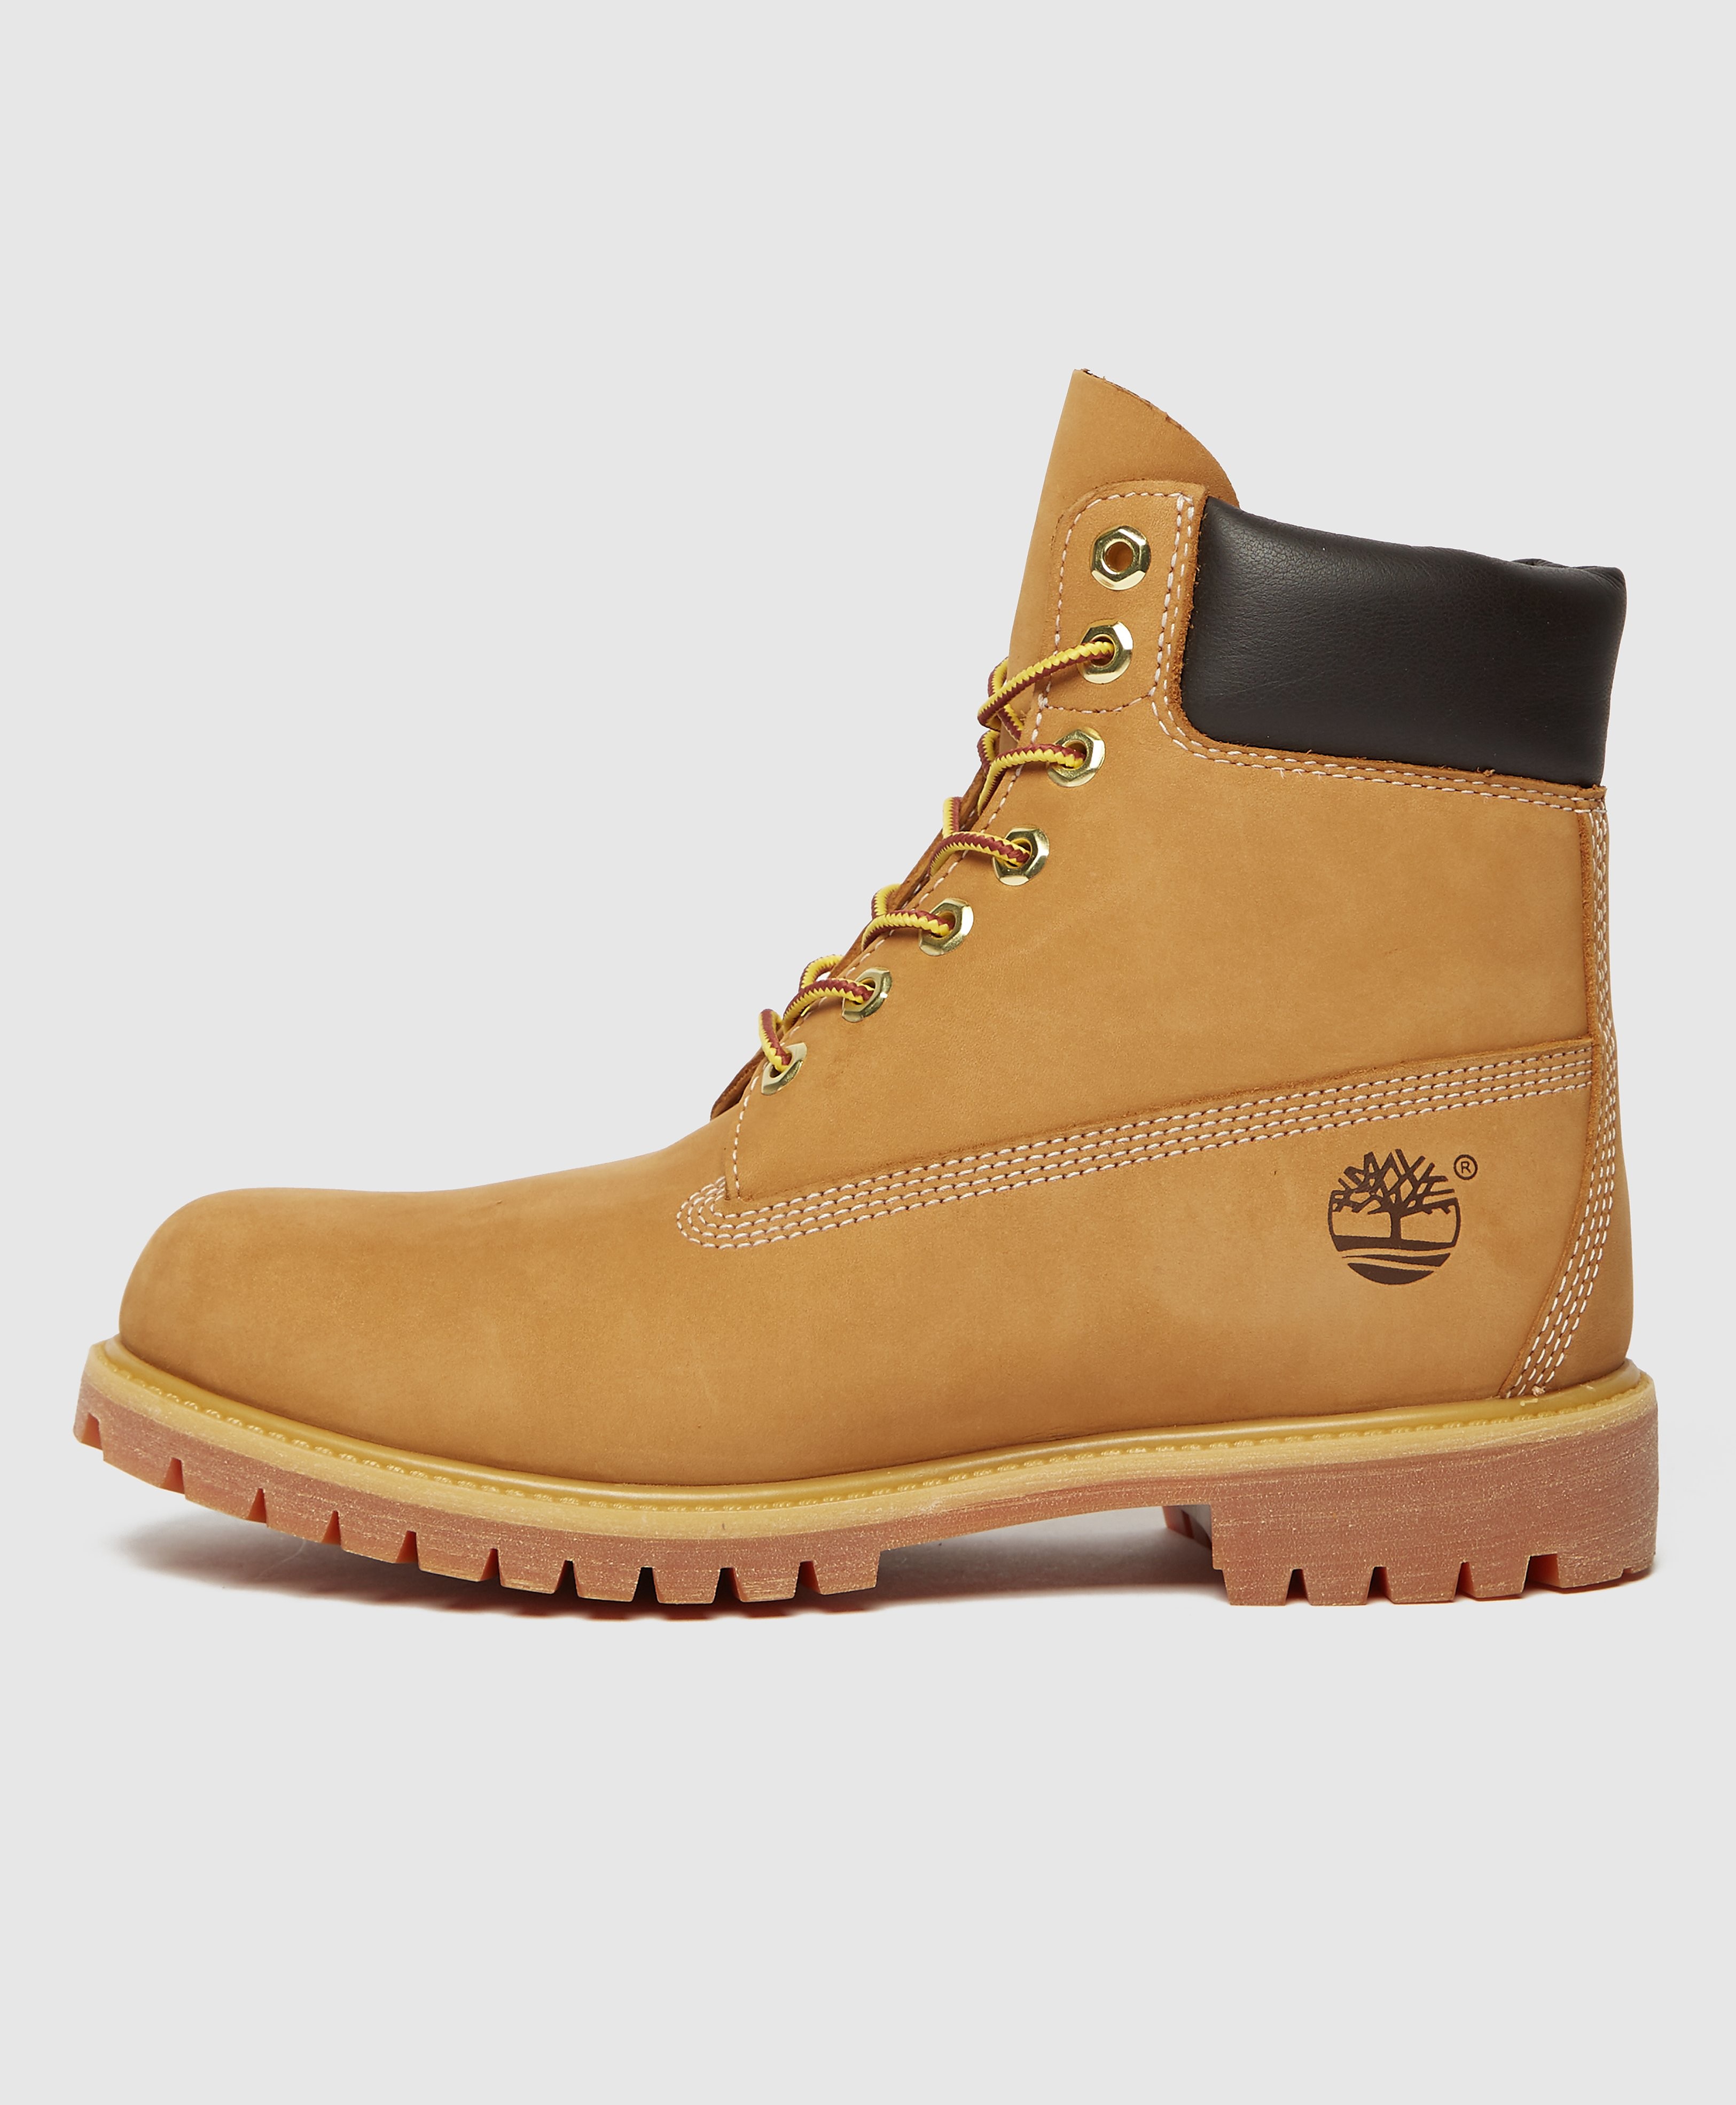 Timberland Men's 6 Inch Premium Boot - Brown, Wheat/Brown